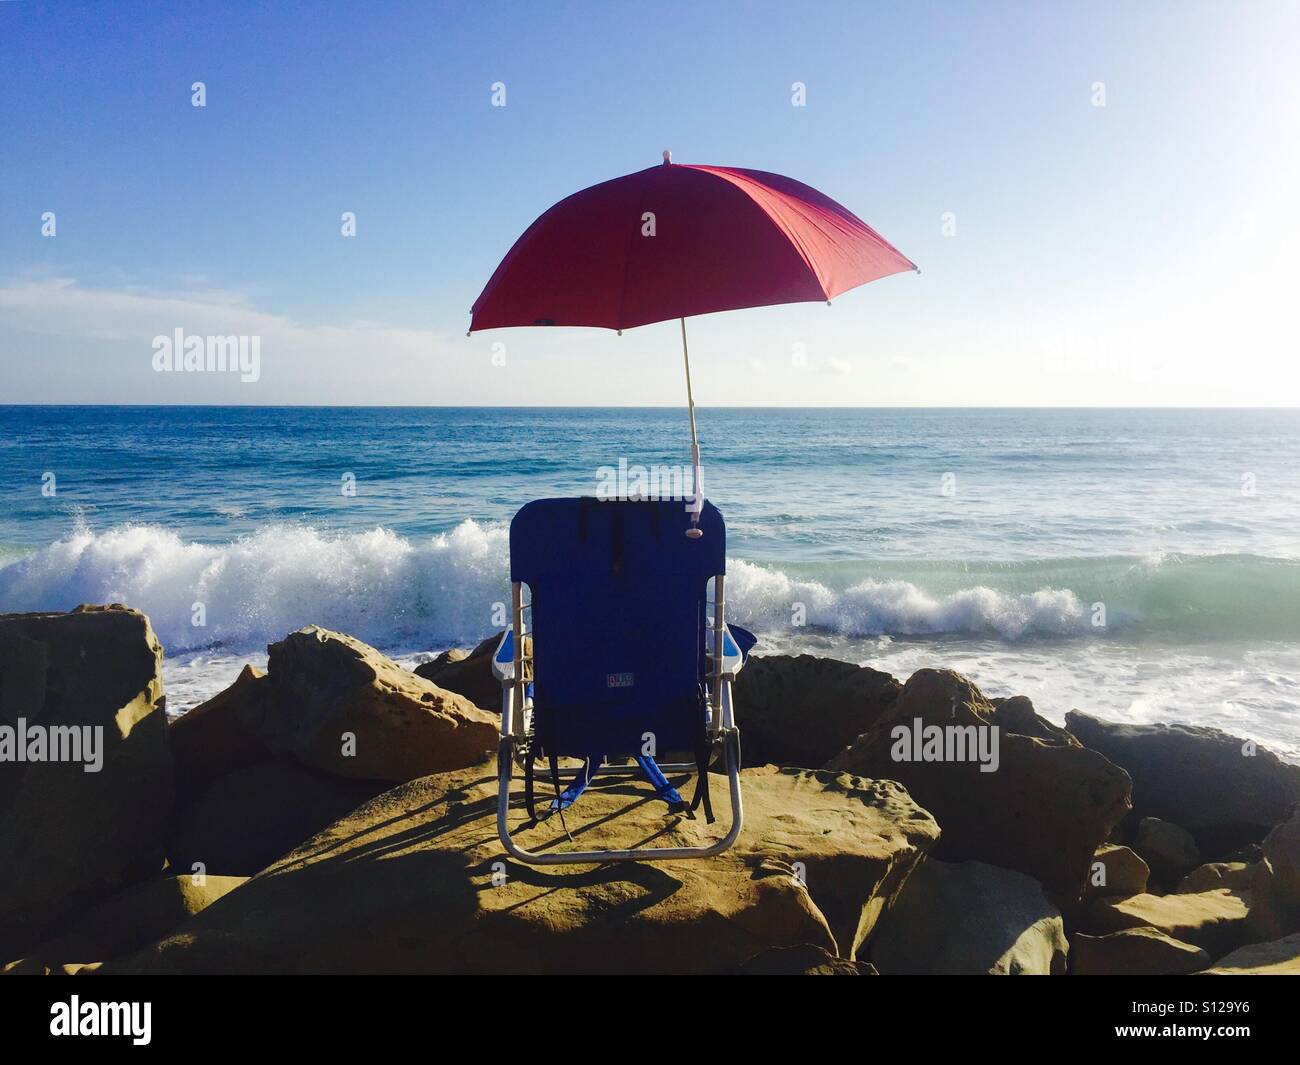 A single red umbrella and a blue chair at the beach. Ventura, California USA. Stock Photo